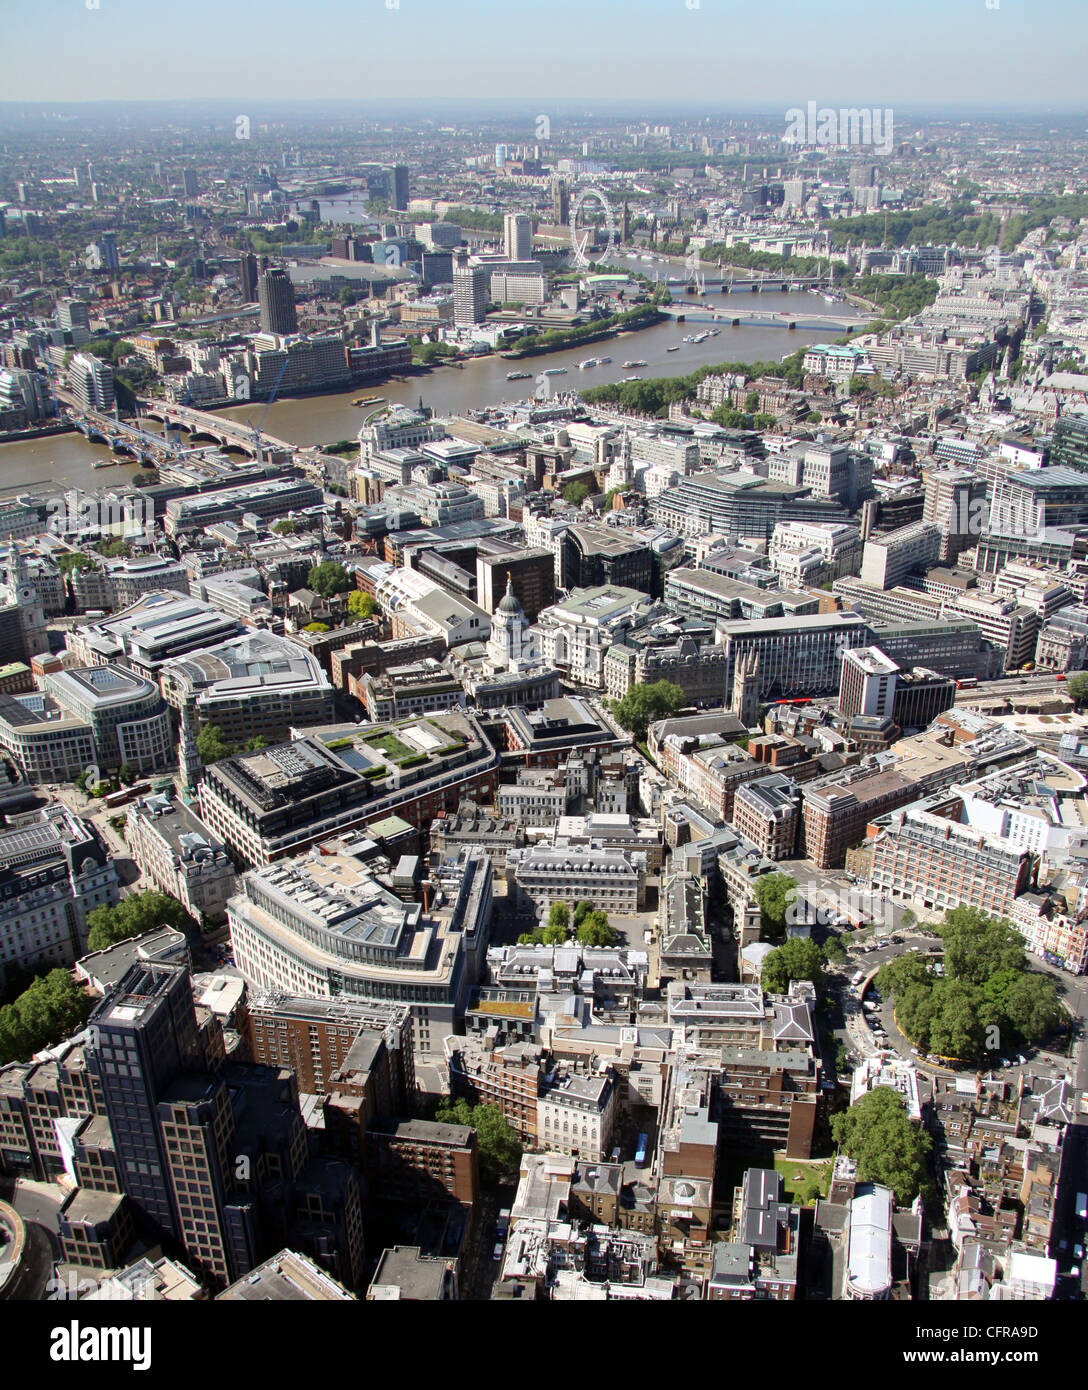 Vista aérea del Hospital St Barts, Londres, con el río Támesis al fondo Foto de stock